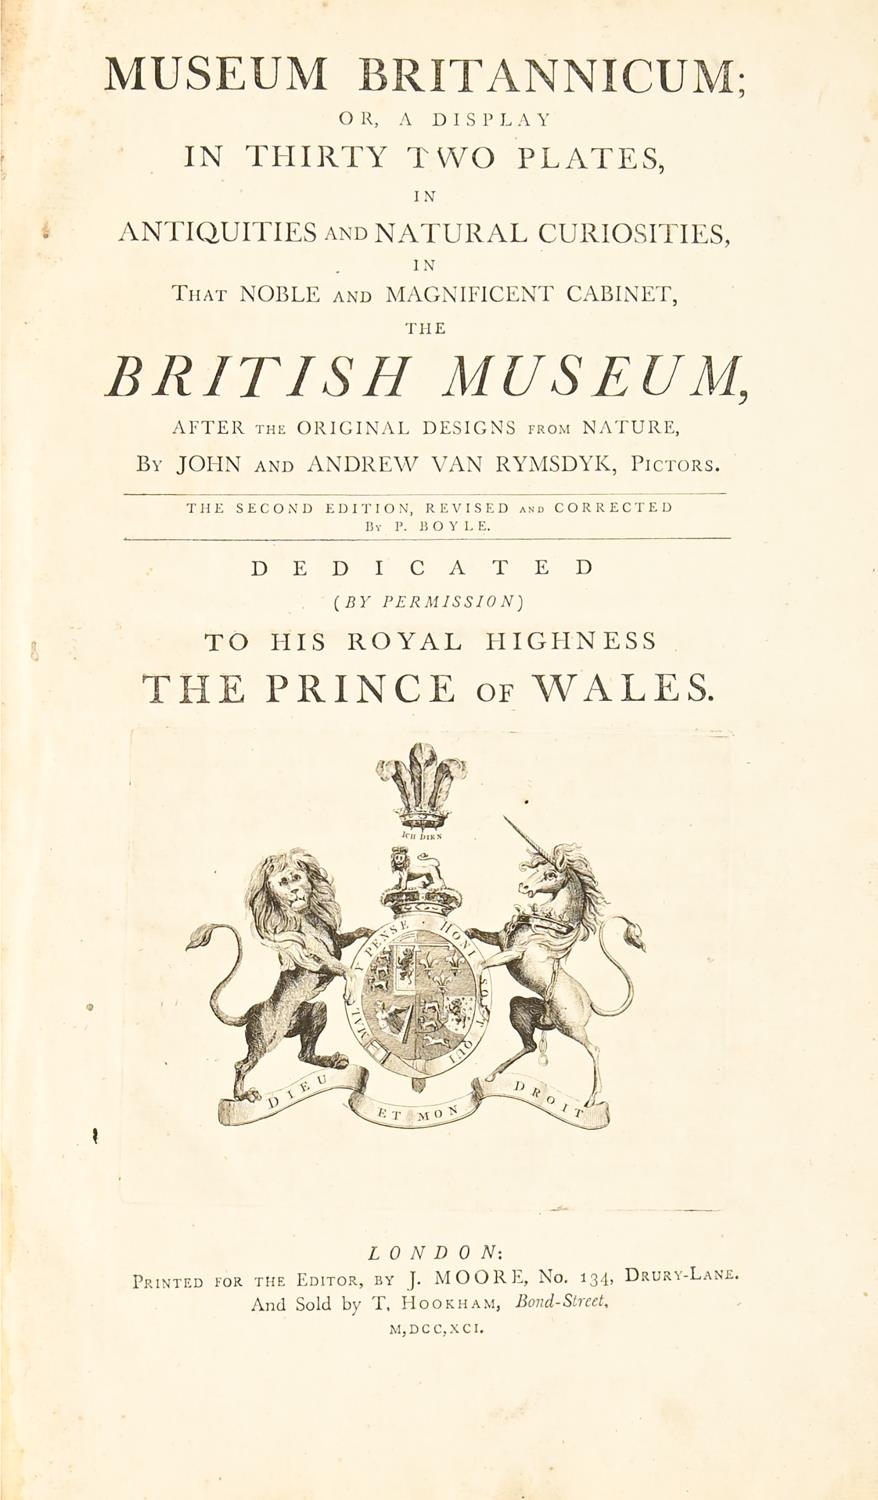 The Enlightenment. Rymsdyk (John & Andrew van) & Boyle (Peter, editor), Museum Britannicum; or, A - Image 2 of 2